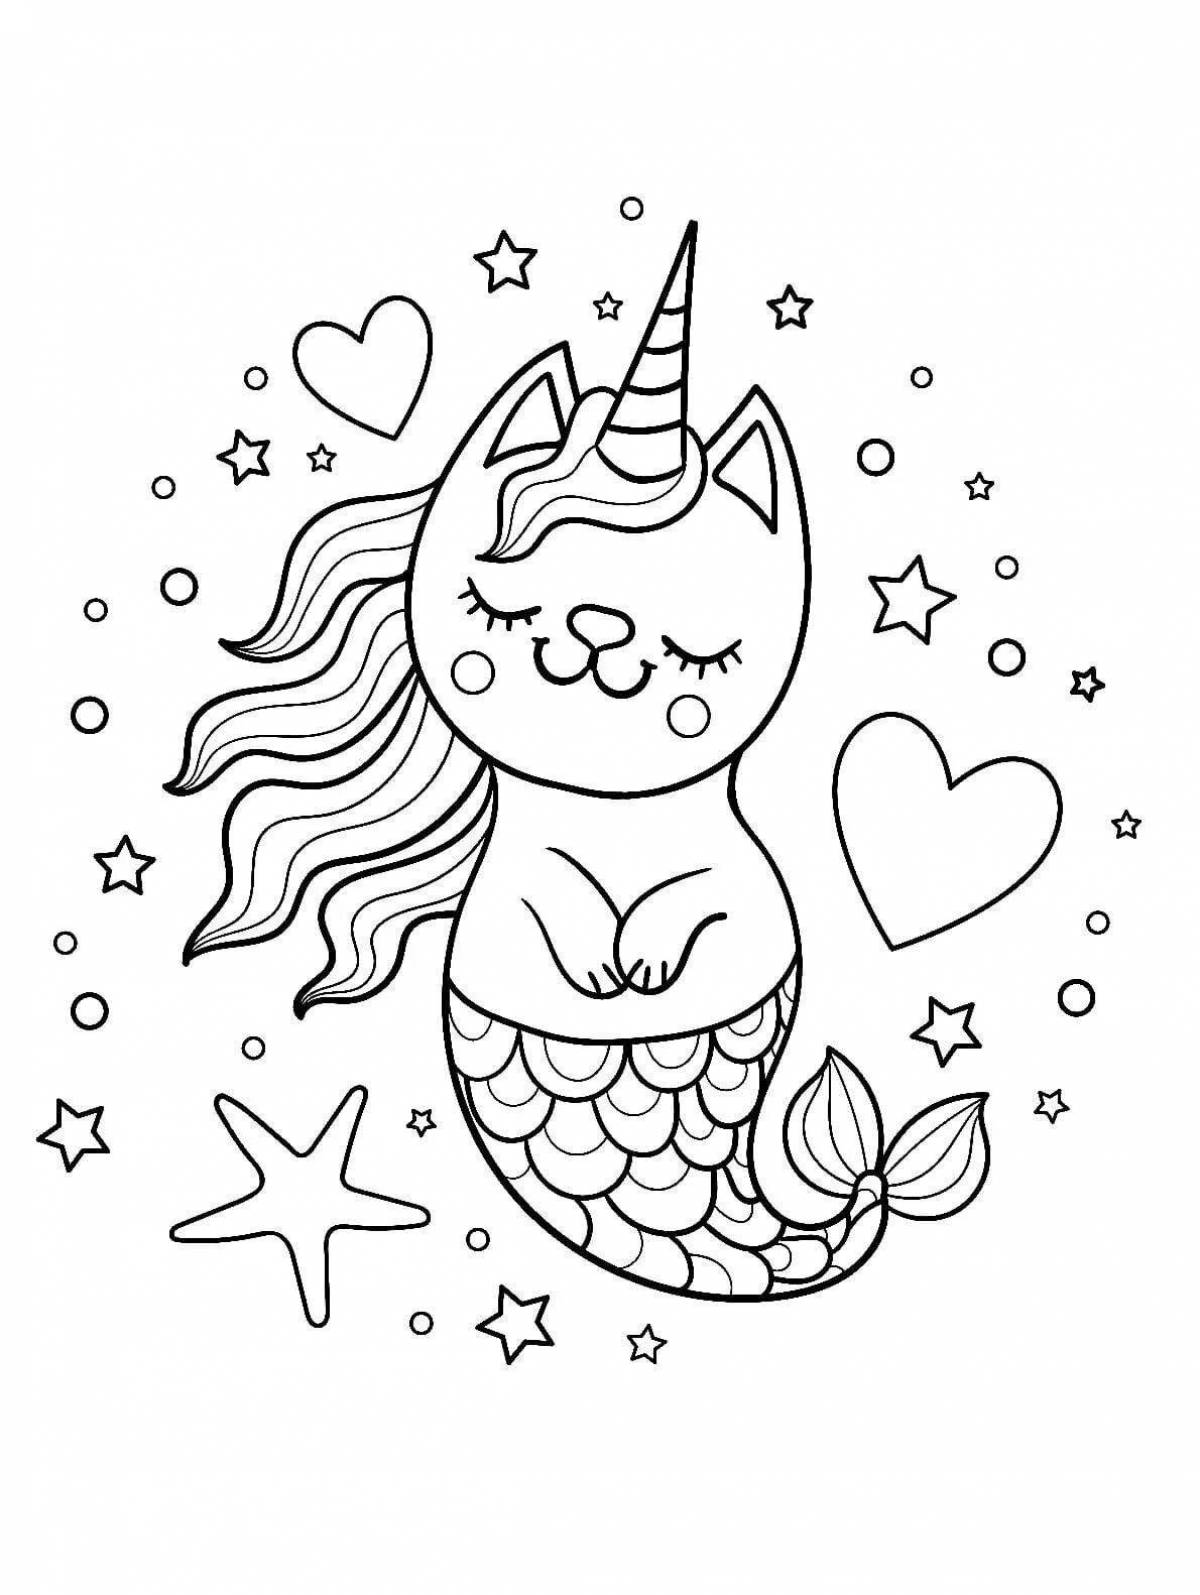 Увлекательная раскраска кошка русалка